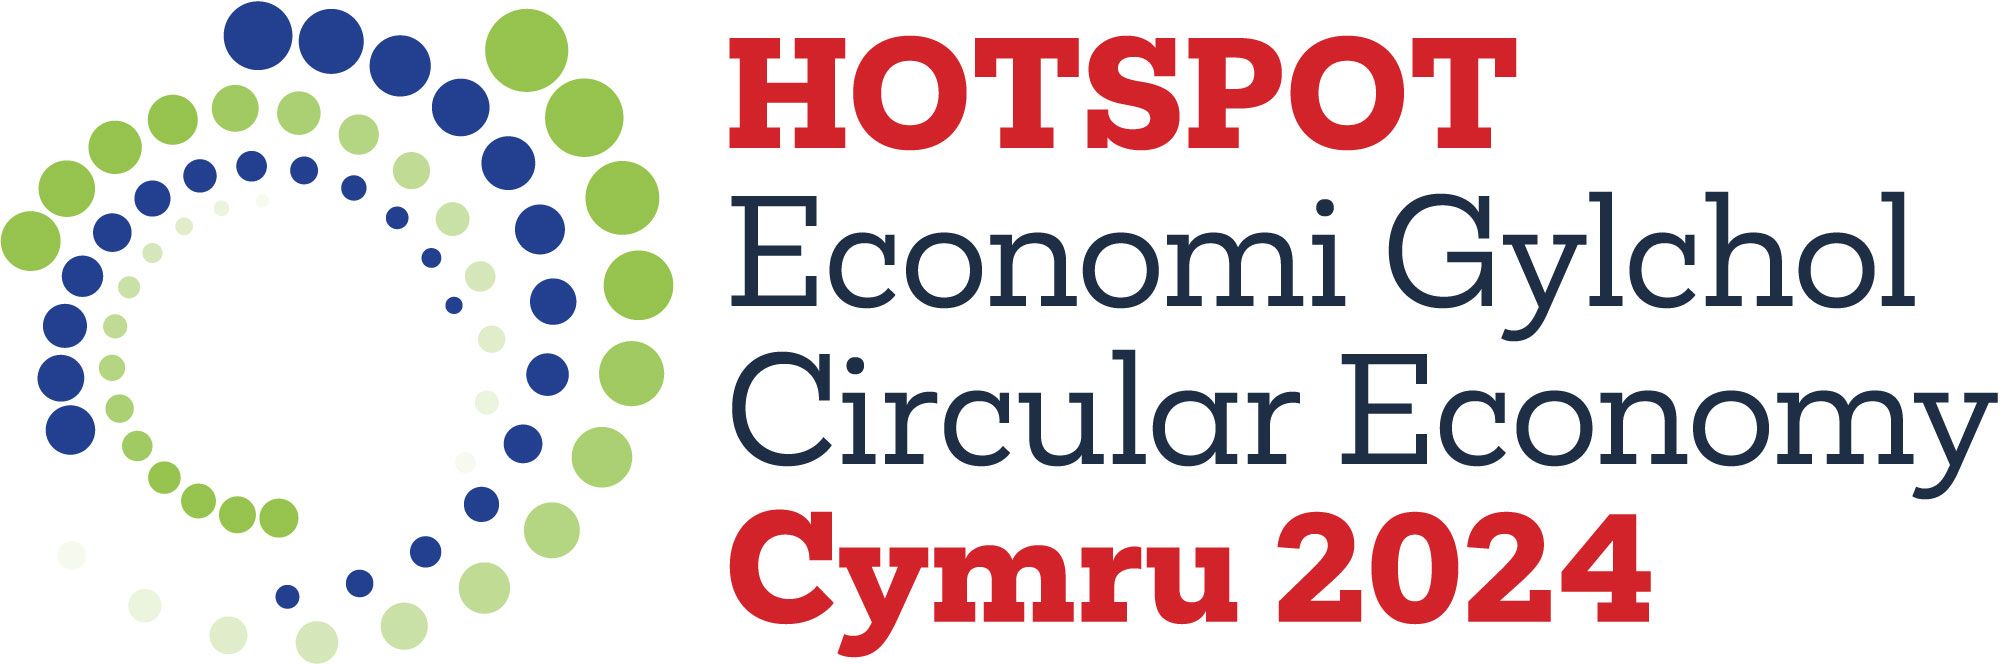 Circular Economy Hotspot Logo